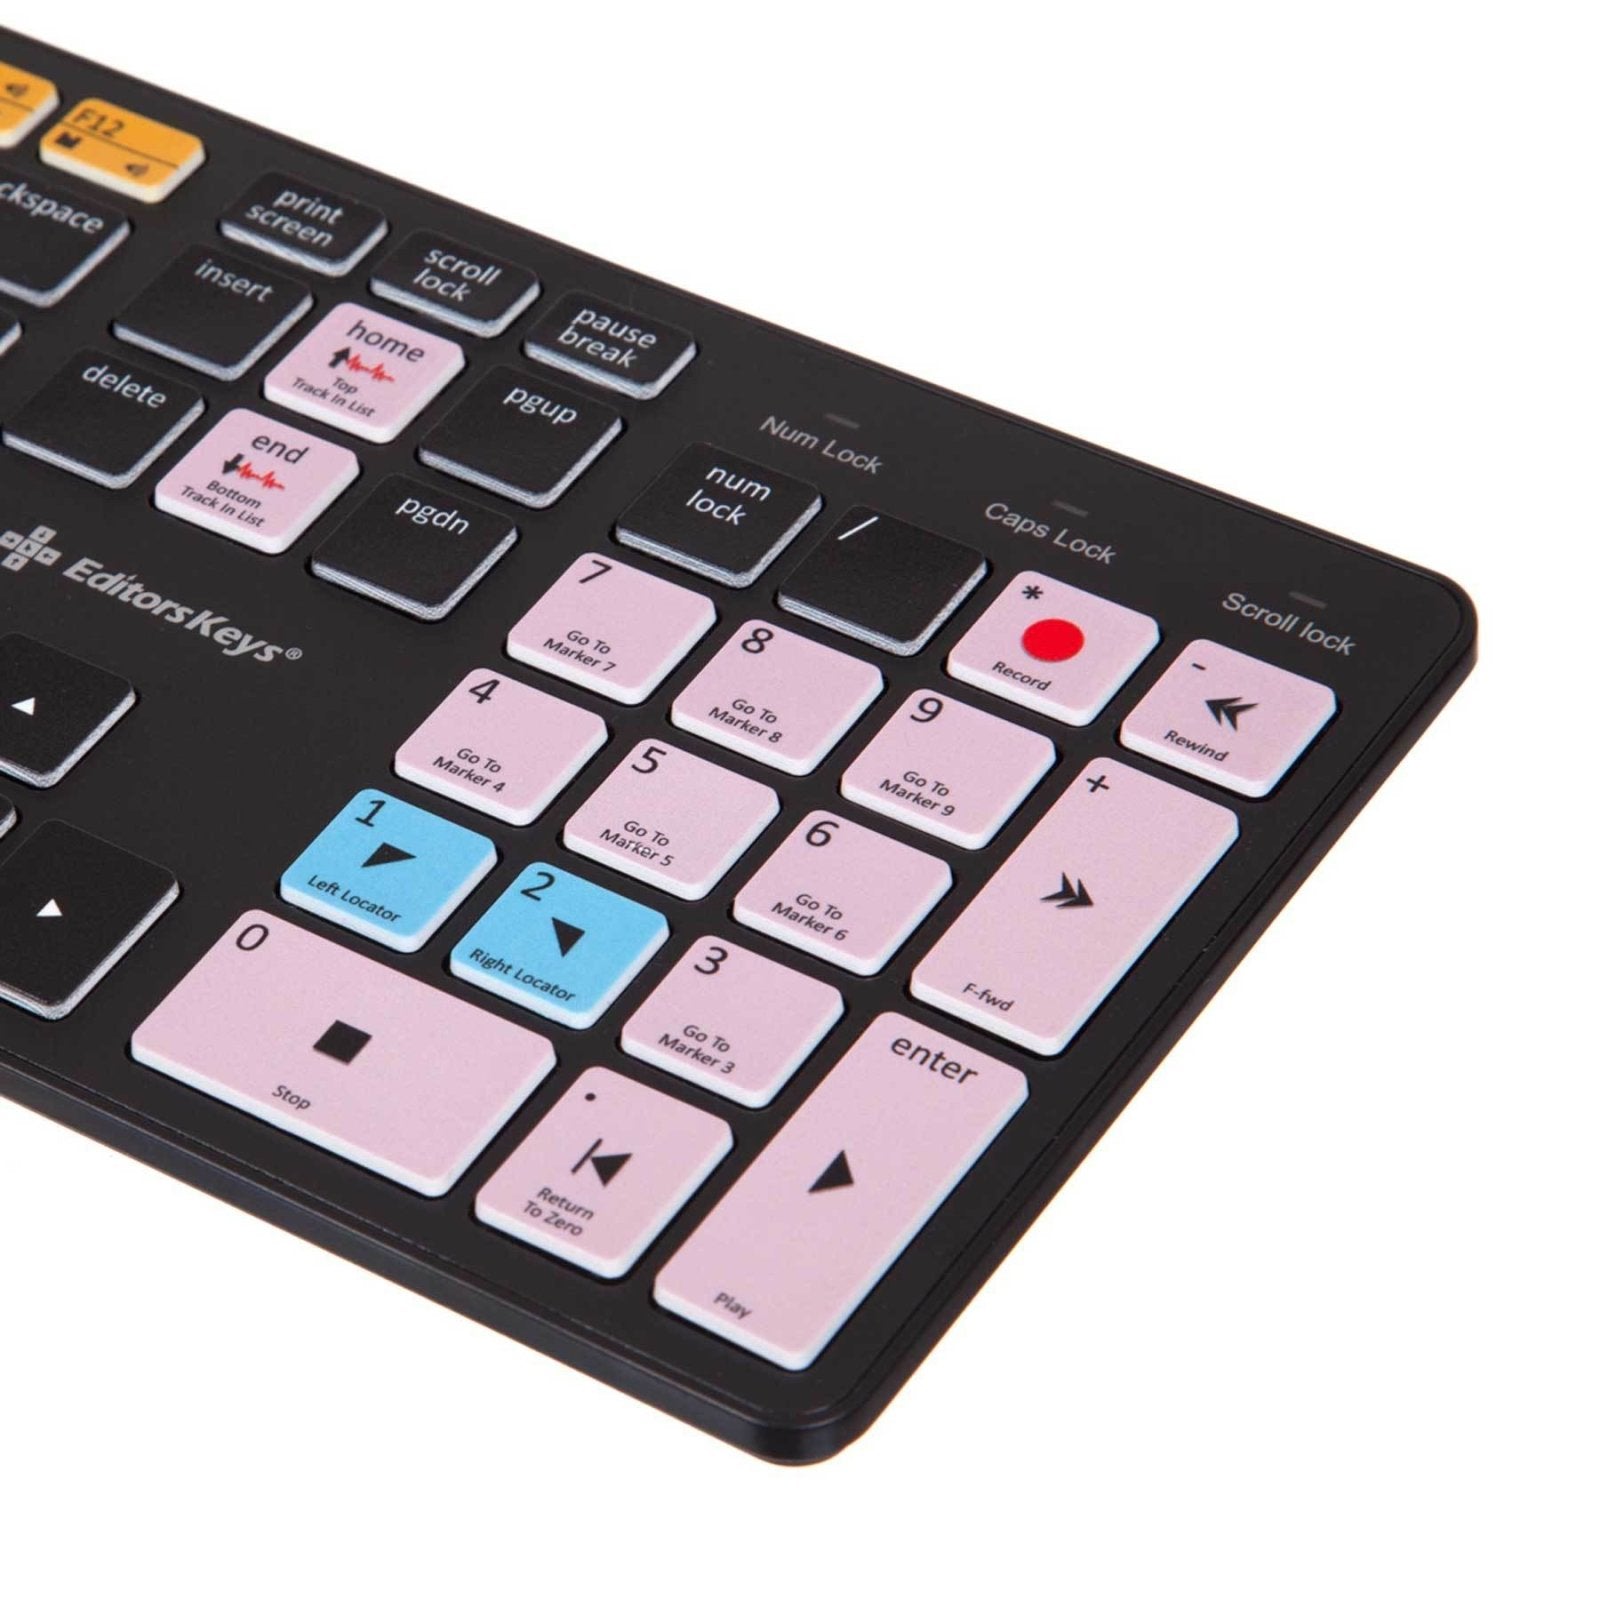 Cubase Keyboard Shortcuts Numeric Pad- Slimline Keyboard 1